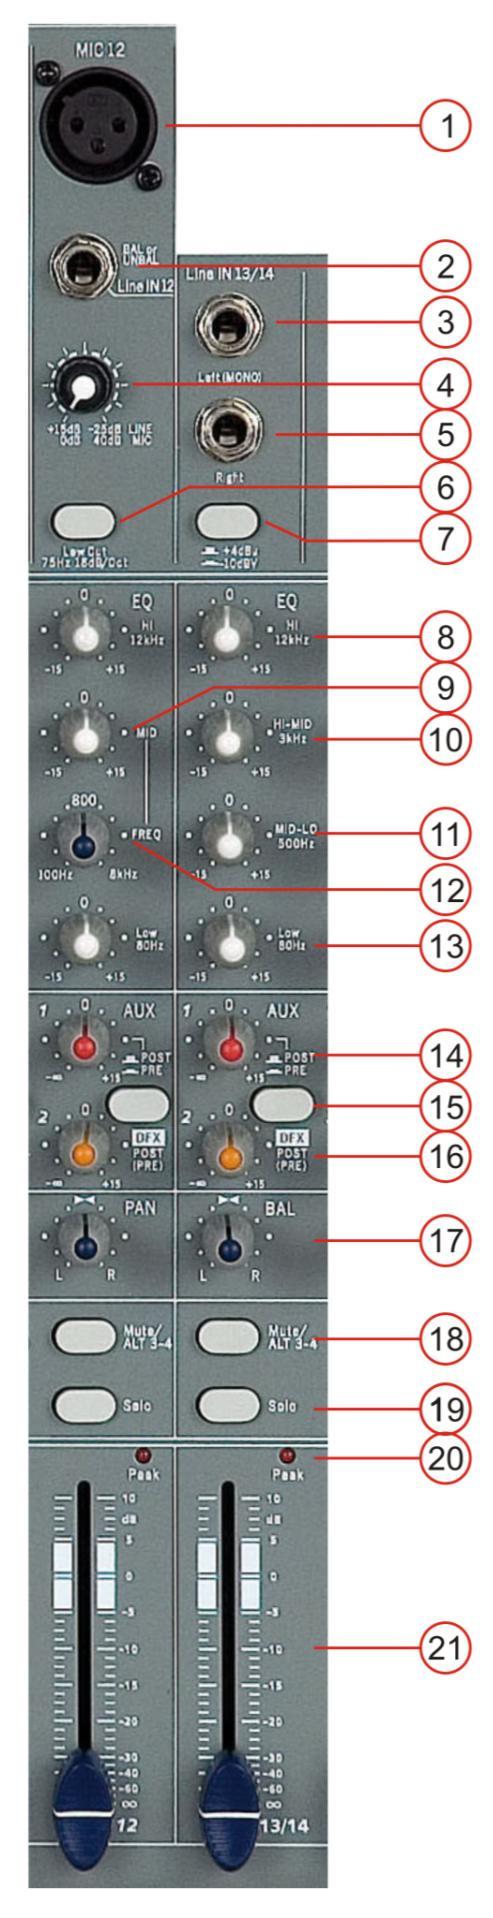 Frontside 1) Balanced mic input (mono channel 1-4) 2) Balanced line input mono (mono channel 1-4) 3) Left line input (stereo channel 5-12) 4) Gain range for mic +0 / +40 db range for line -25 / +15